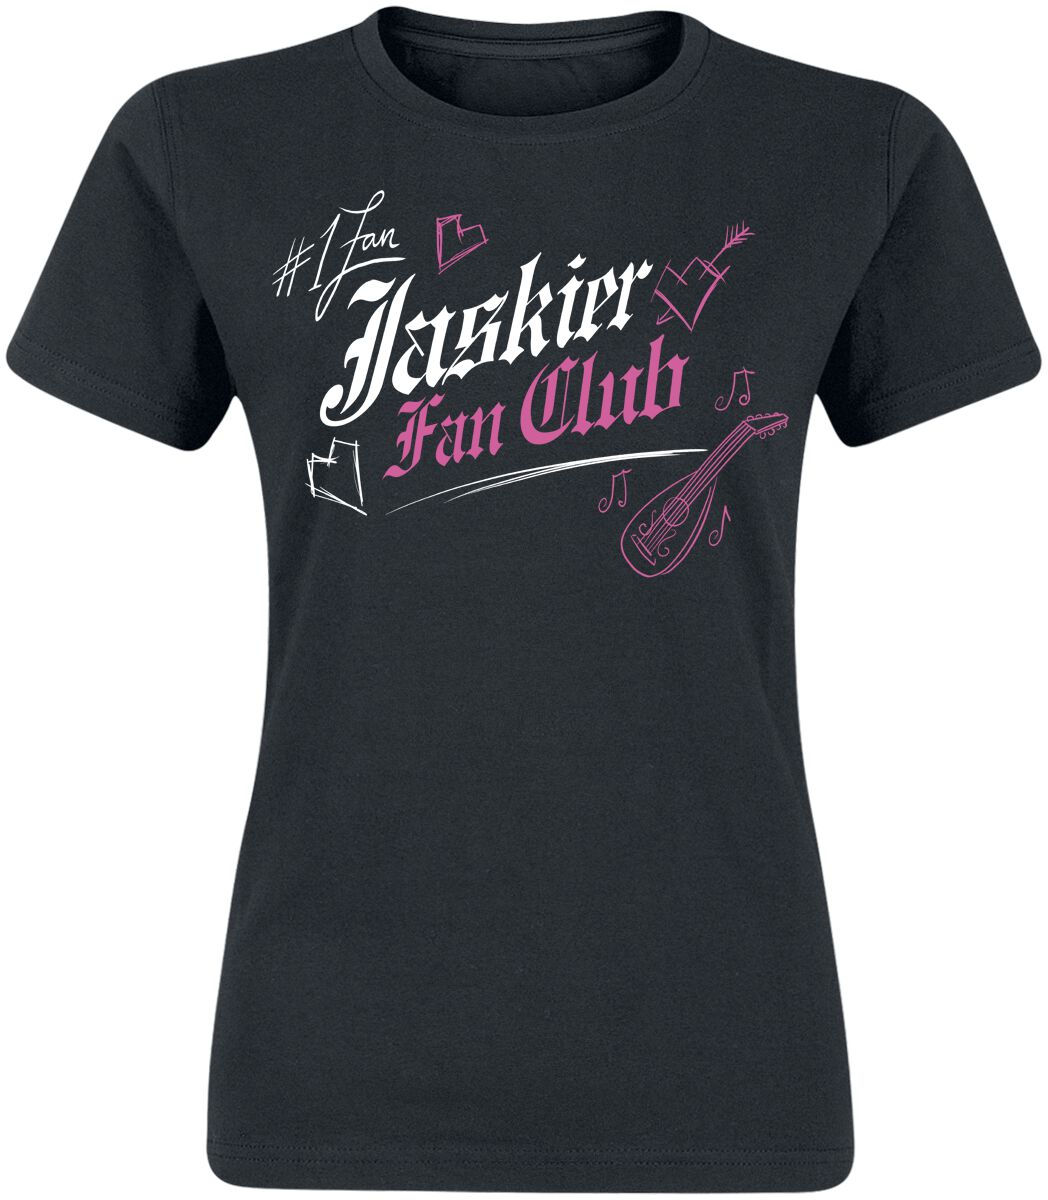 The Witcher Jaskier Fan Club T-Shirt schwarz in L